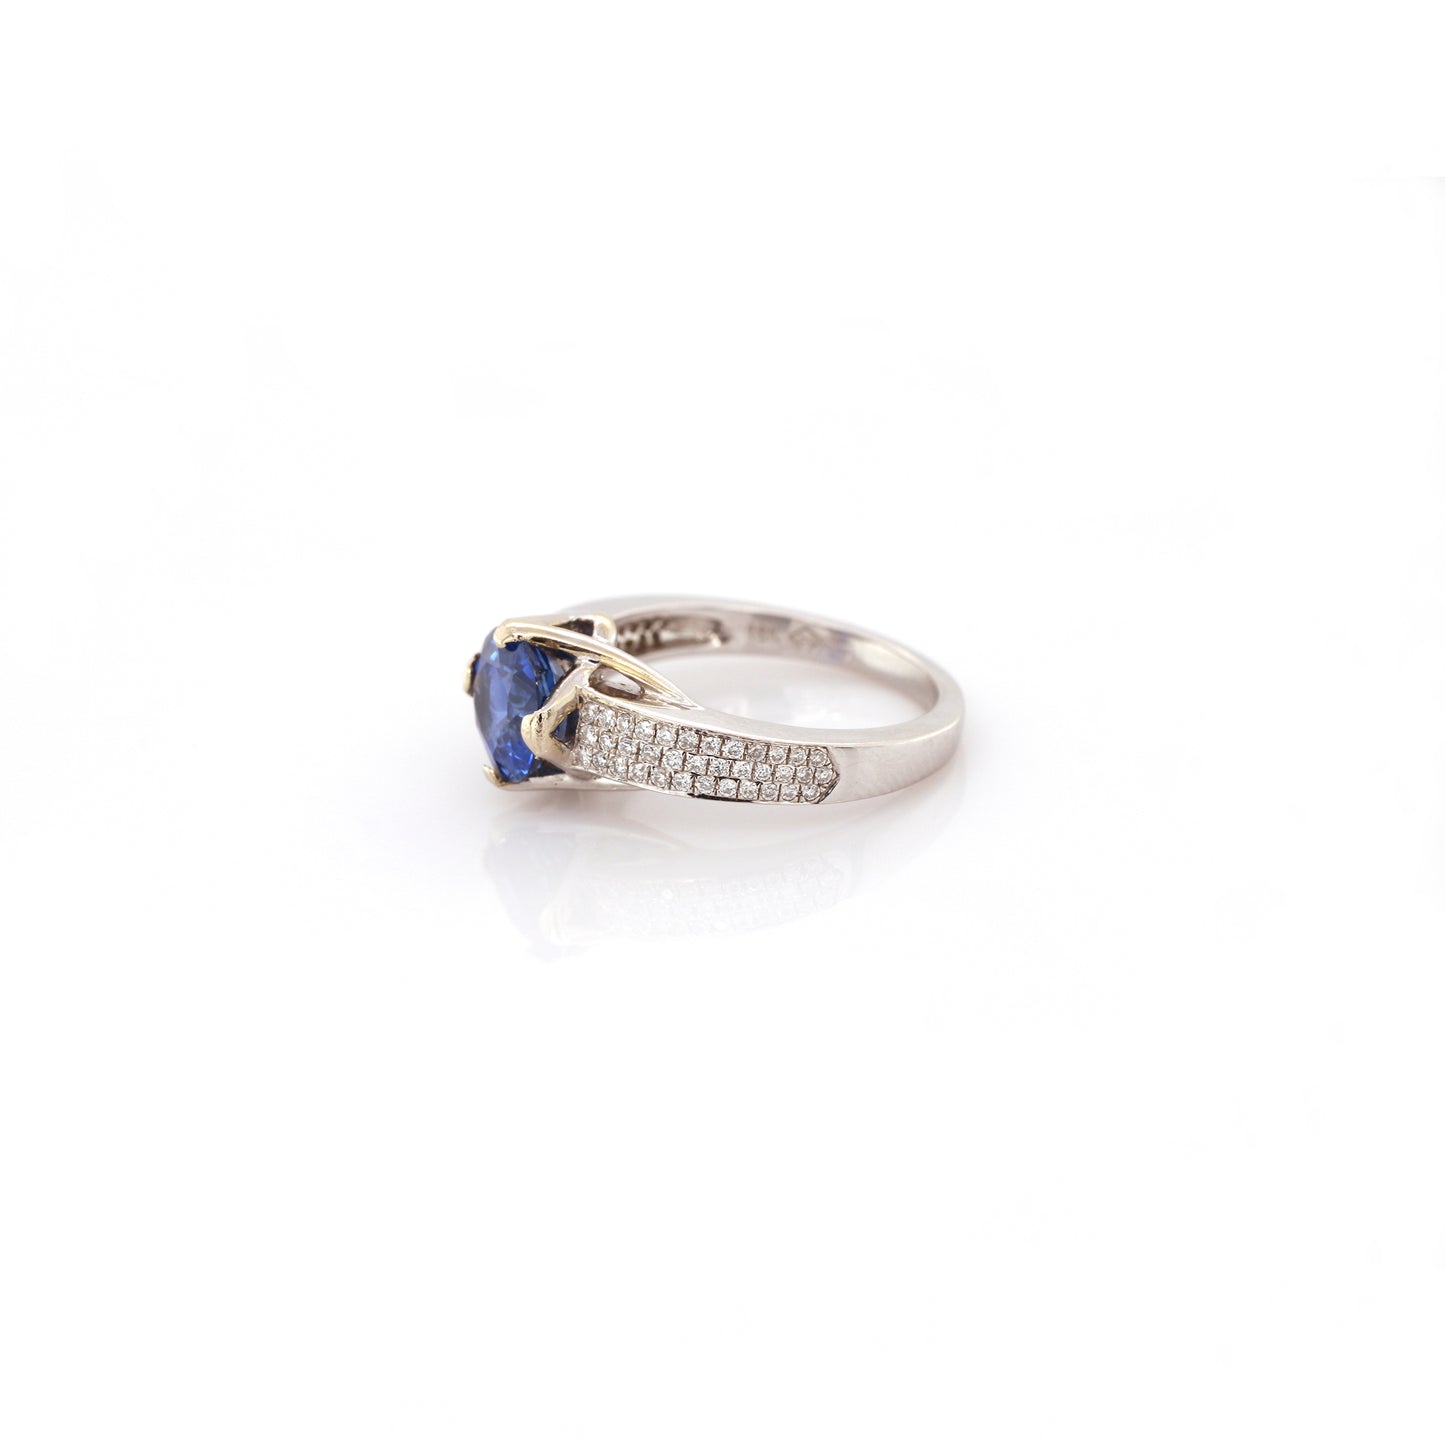 Blue Sapphire & Diamond Ring - 18K White Gold 5.28gm